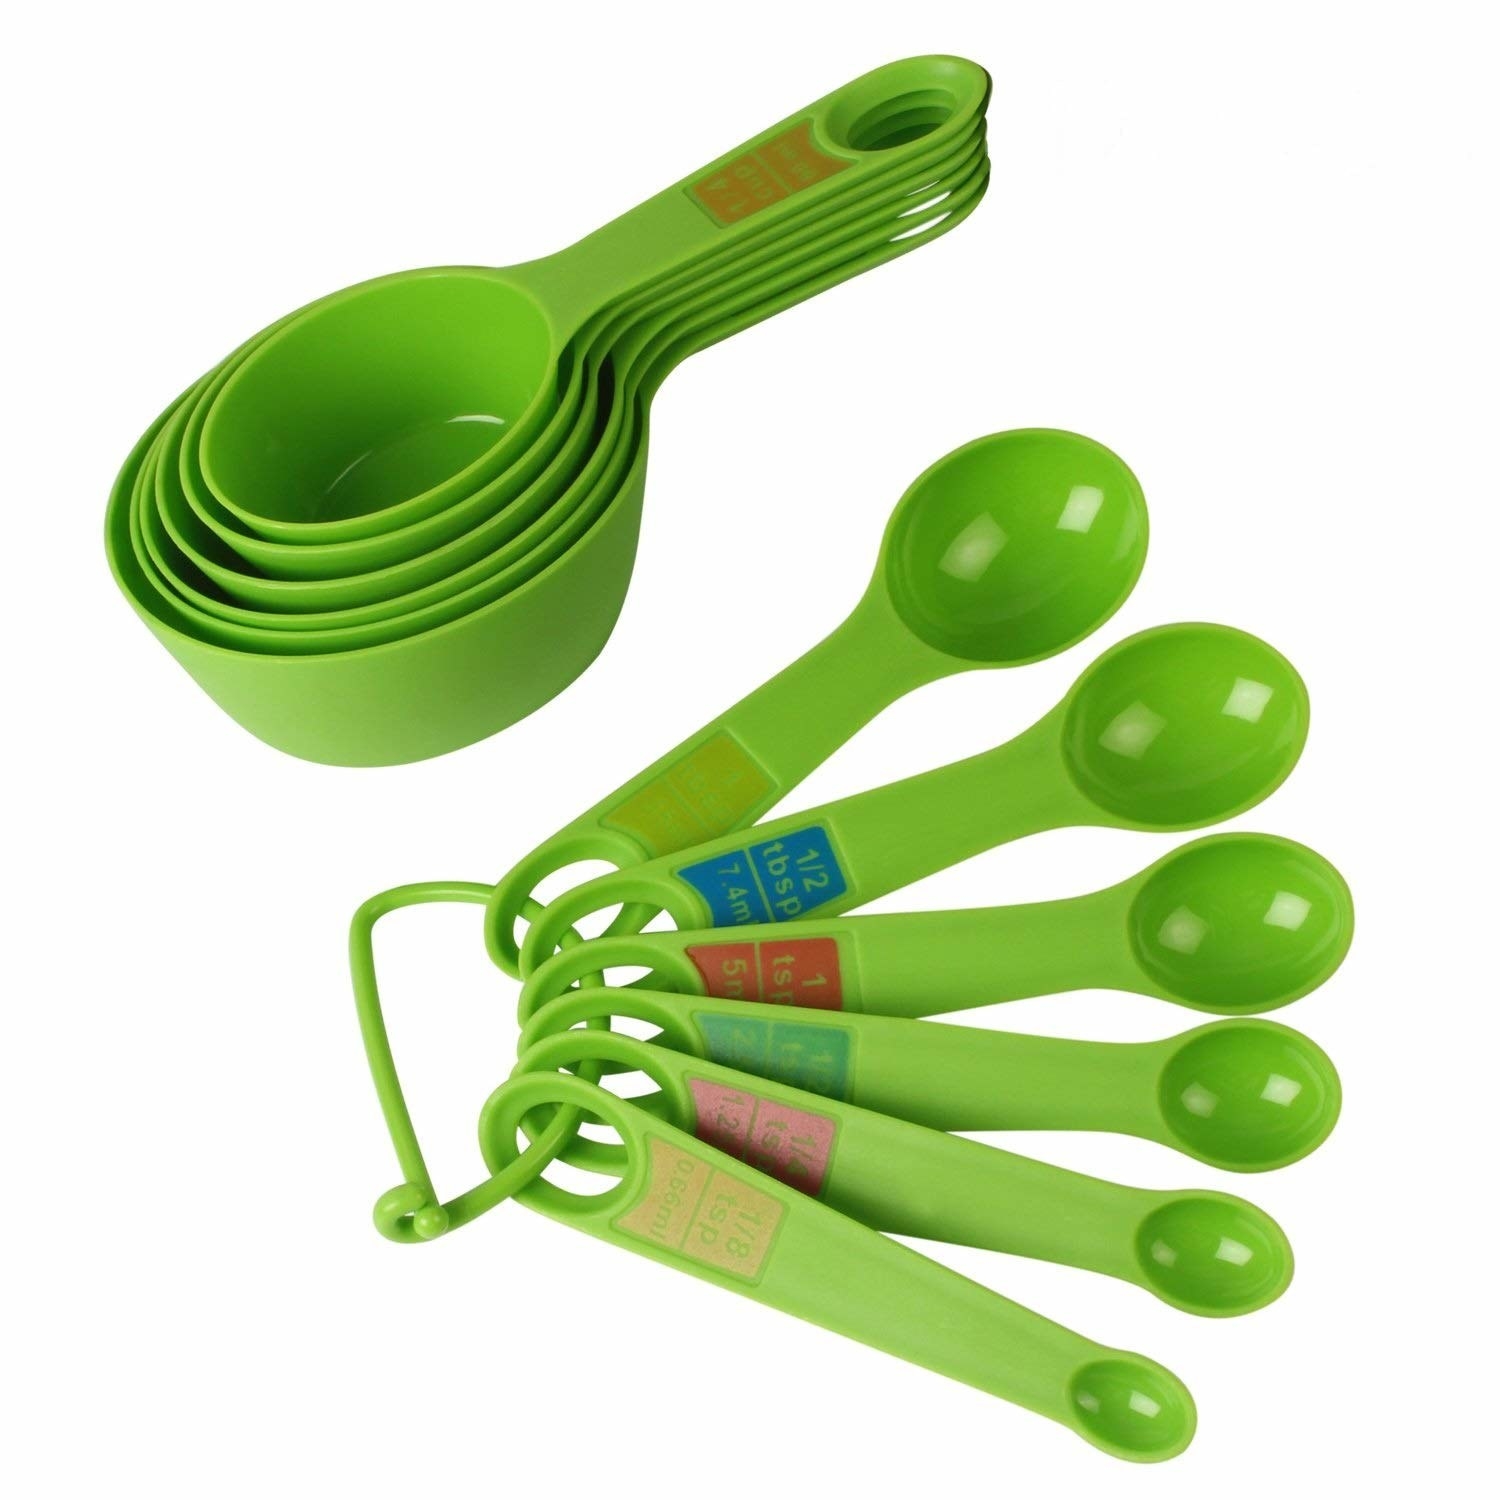 A green measuring spoon set